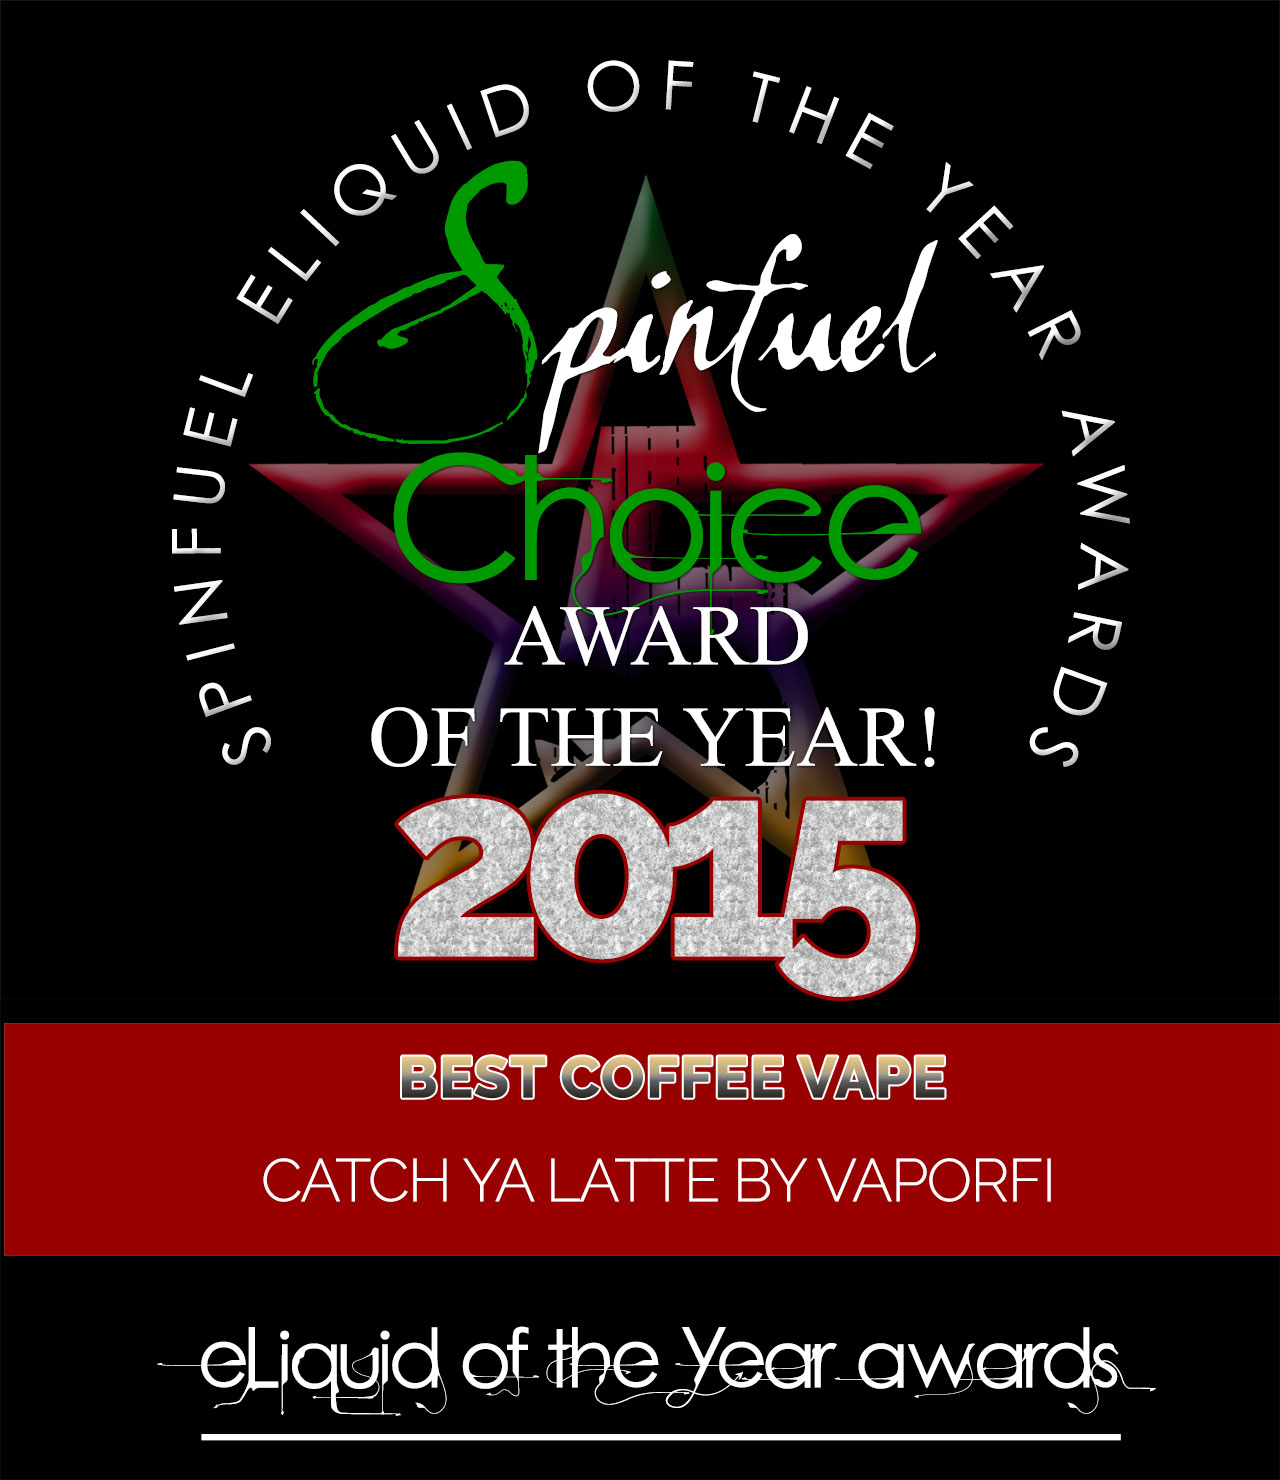 BEST COFFEE - VAPORFI Grand Reserve - Spinfuel Choice Award 2015